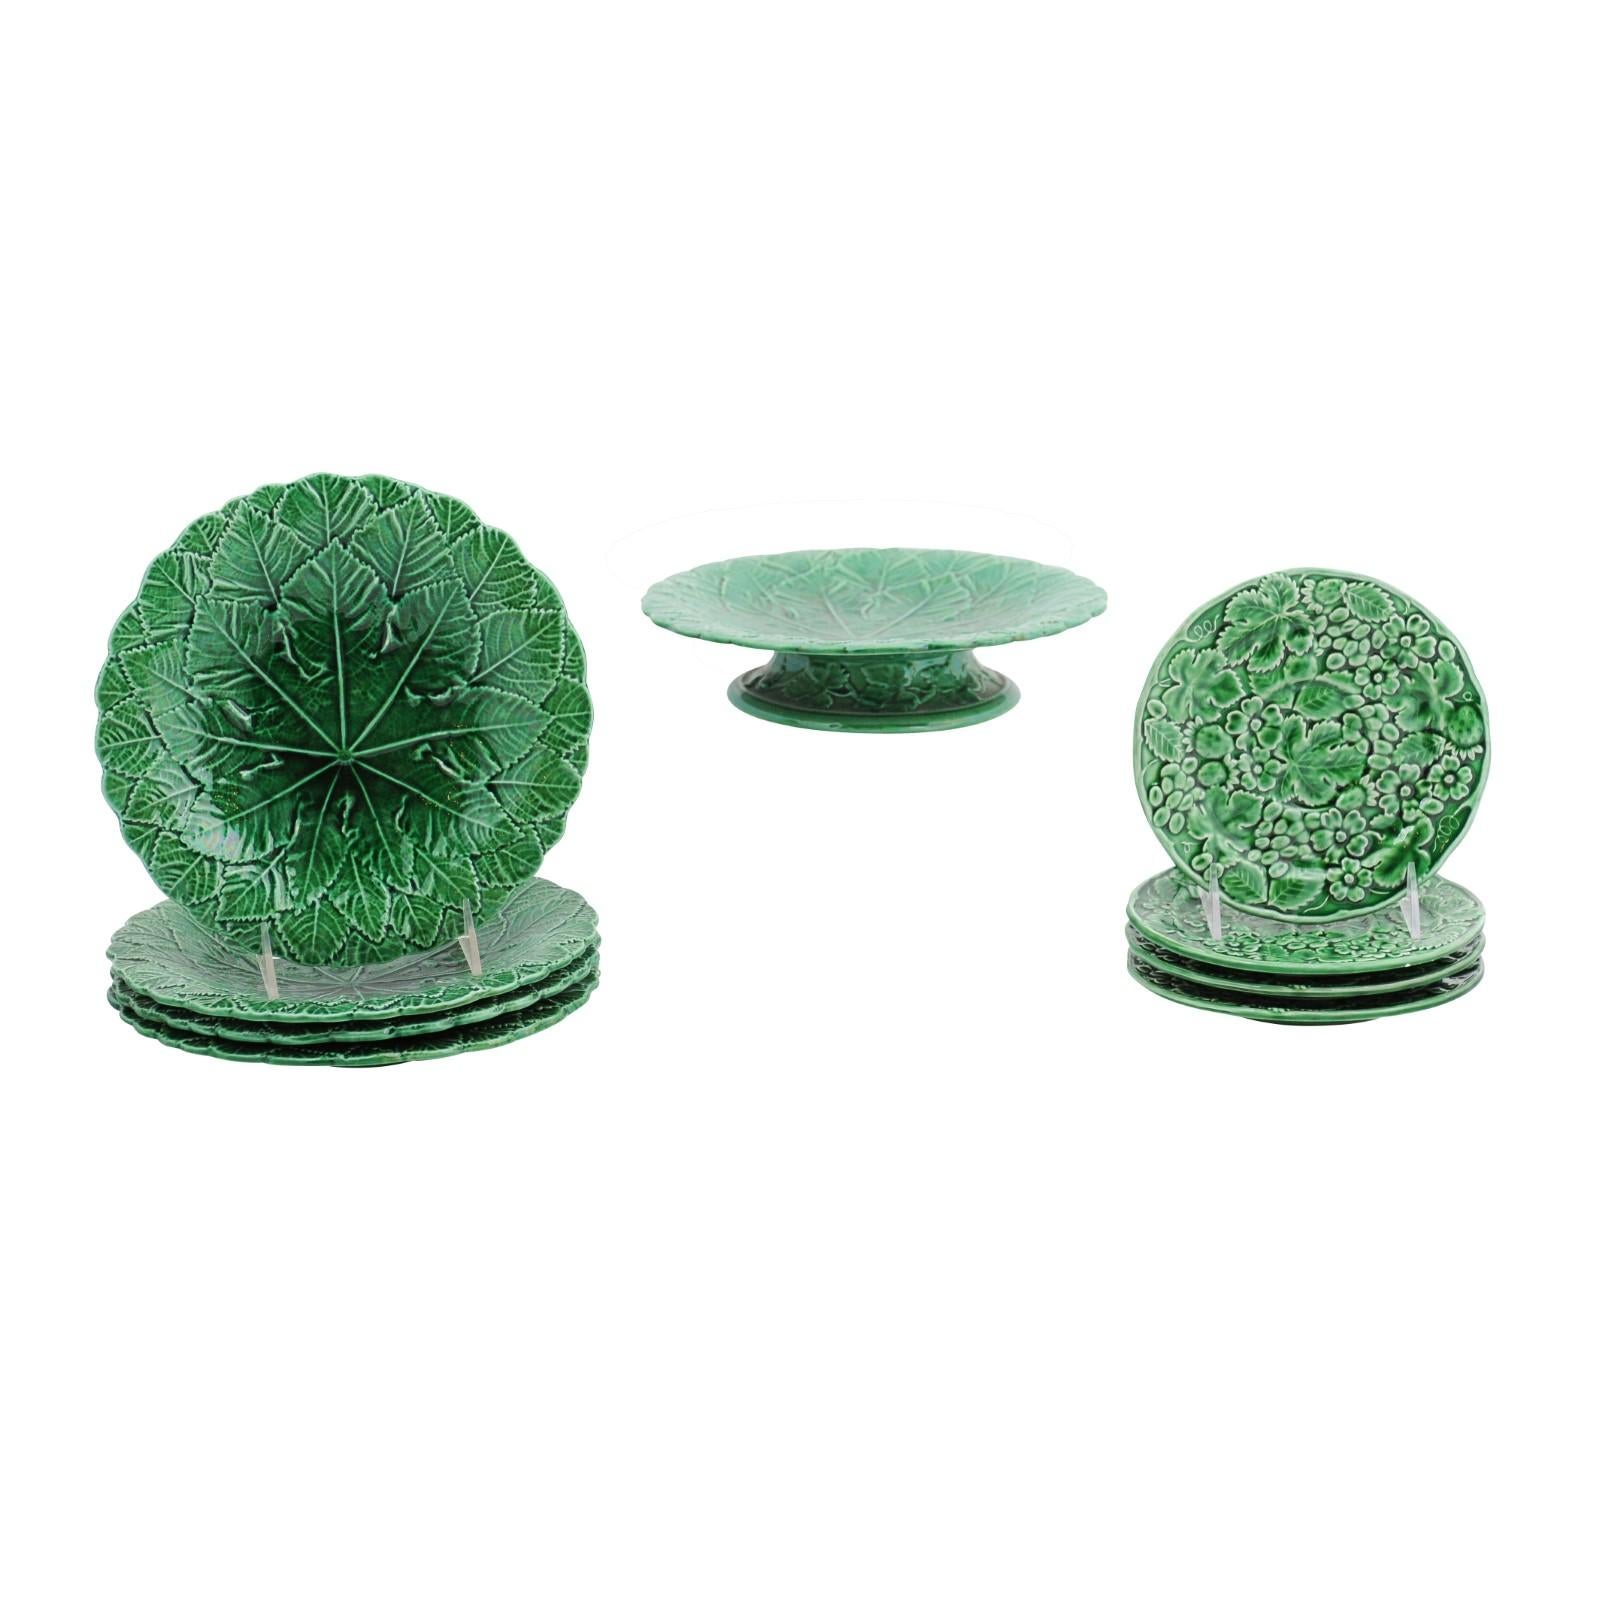 Set of Nine Green Glazed Porcelain Pieces - FOUR AVAILABLE